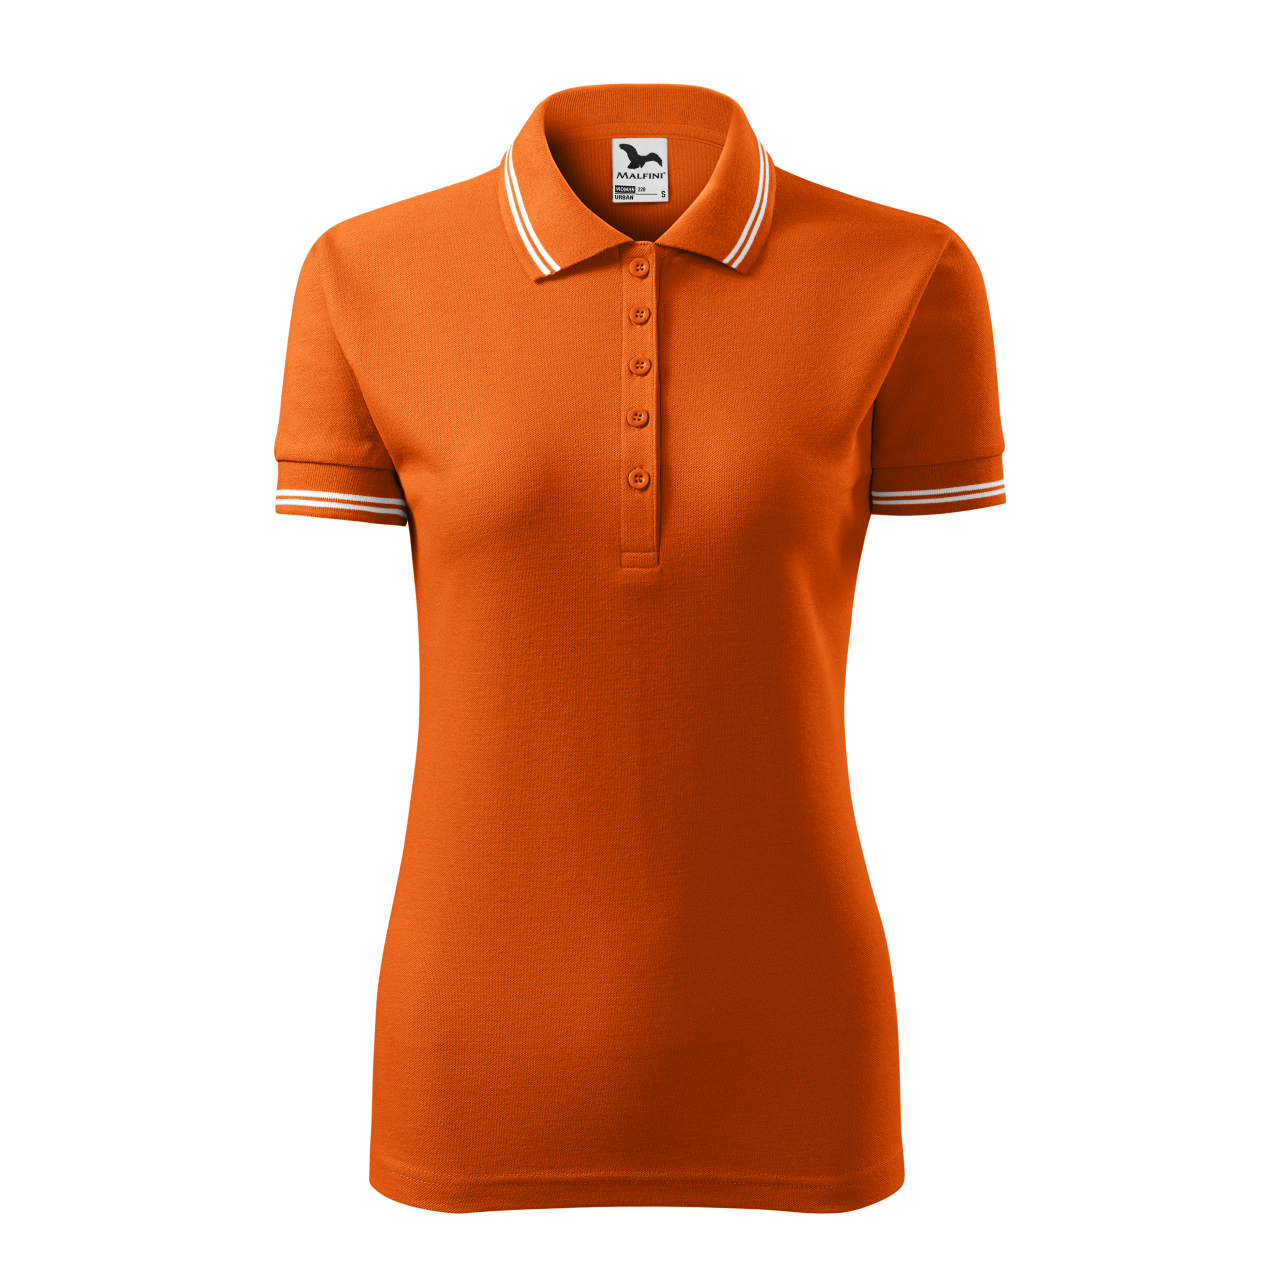 Polokošile dámská Malfini Urban - oranžová, XL